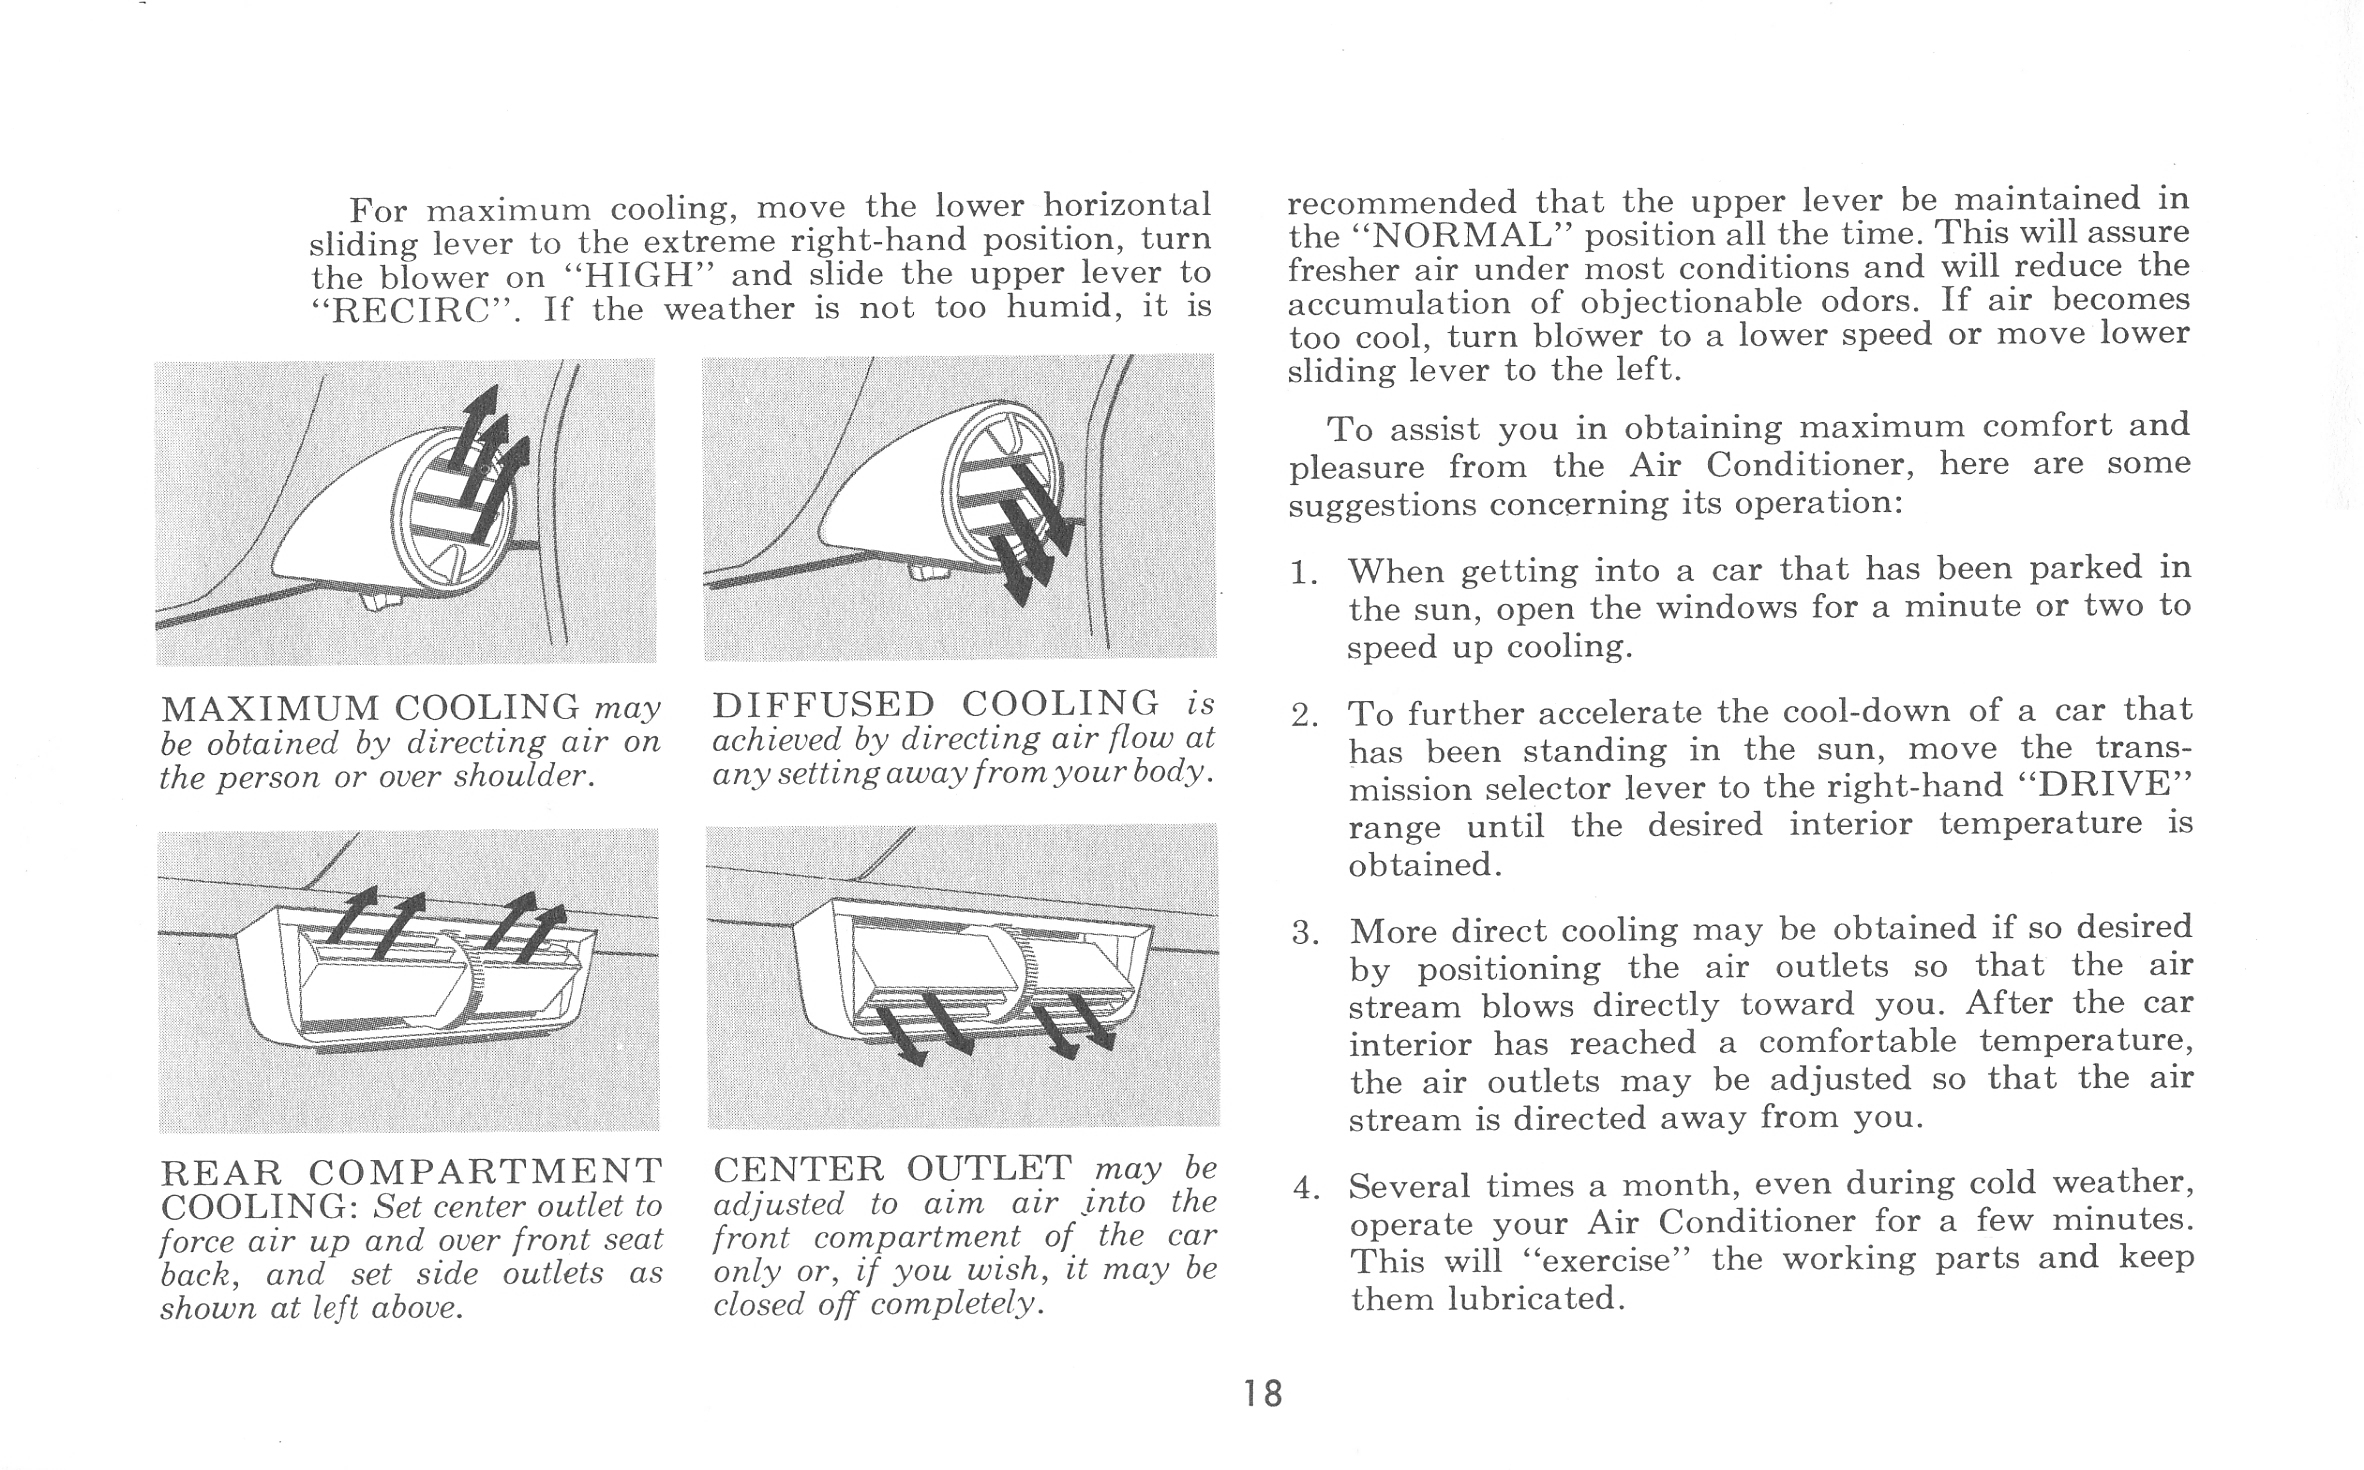 n_1962 Cadillac Owner's Manual-Page 18.jpg